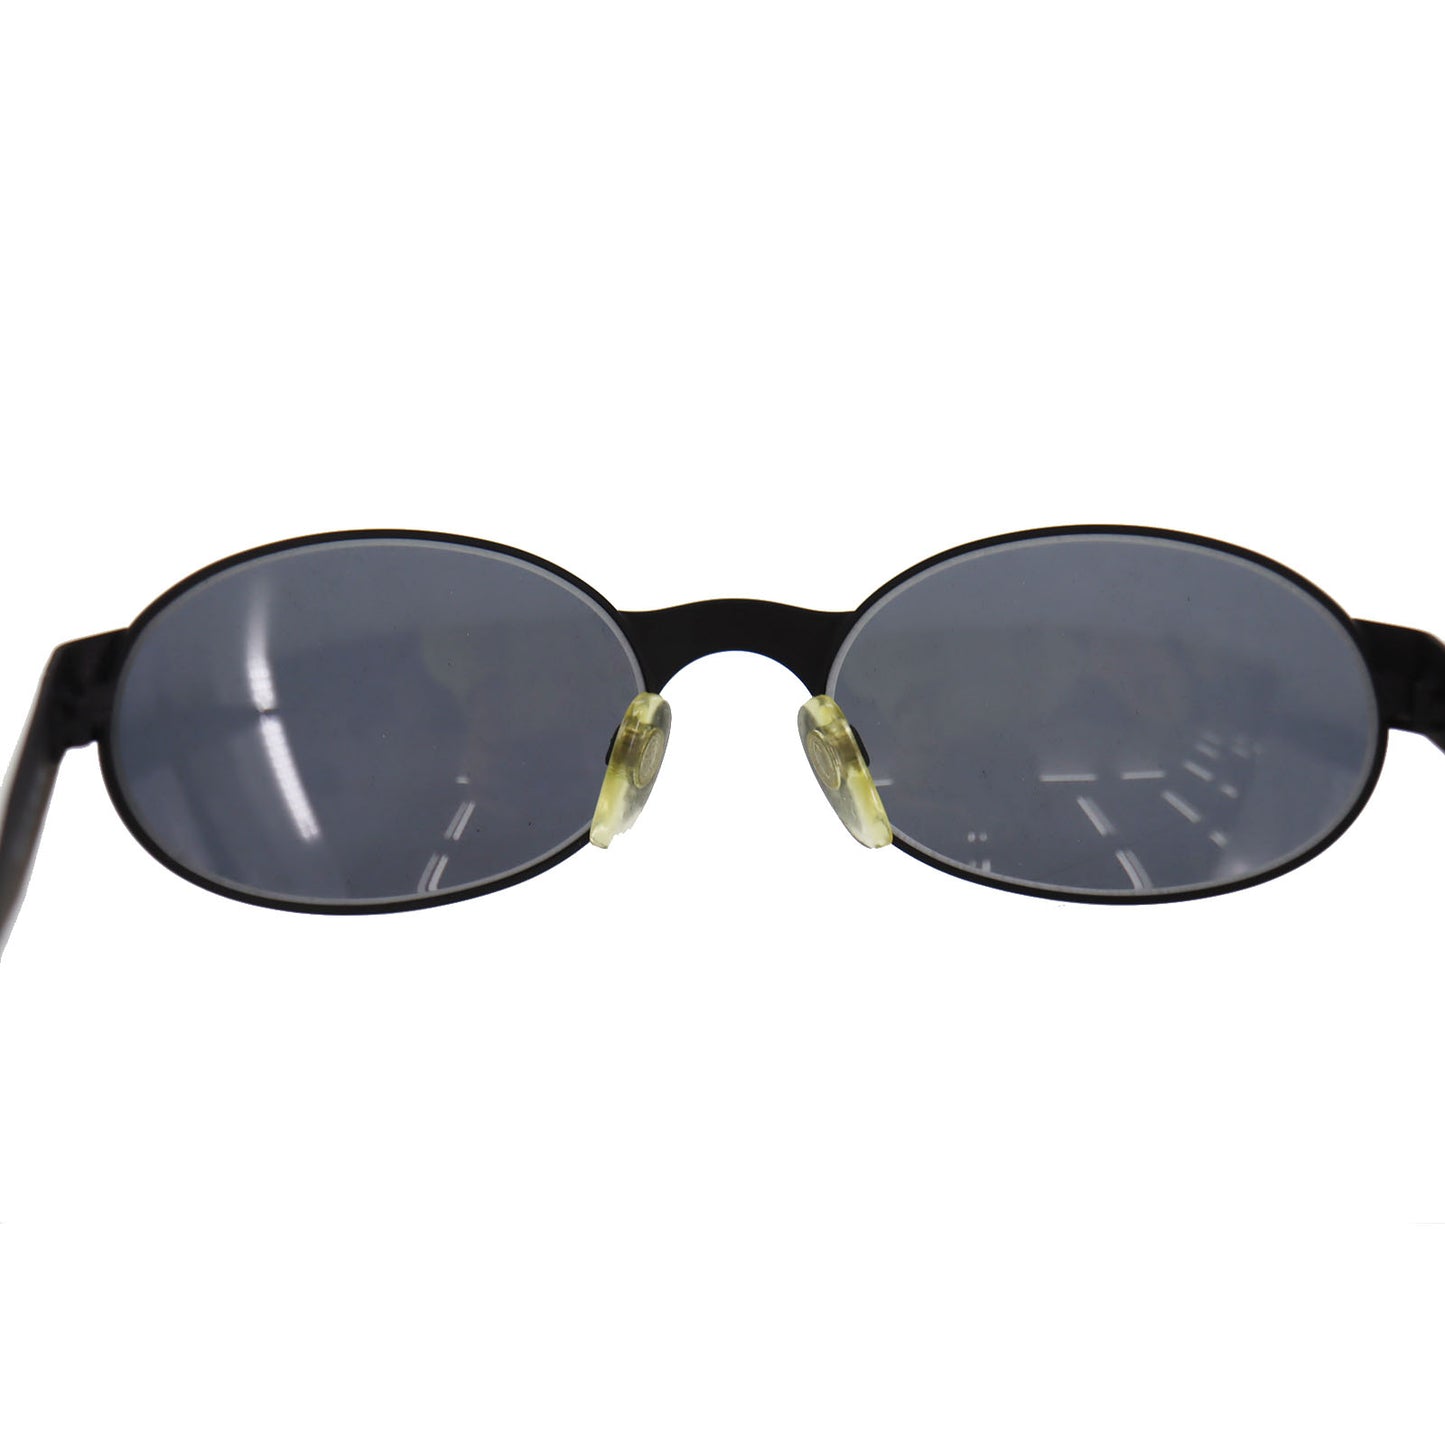 CHANEL Logos Sunglasses Mat Black Eye Wear #CP927